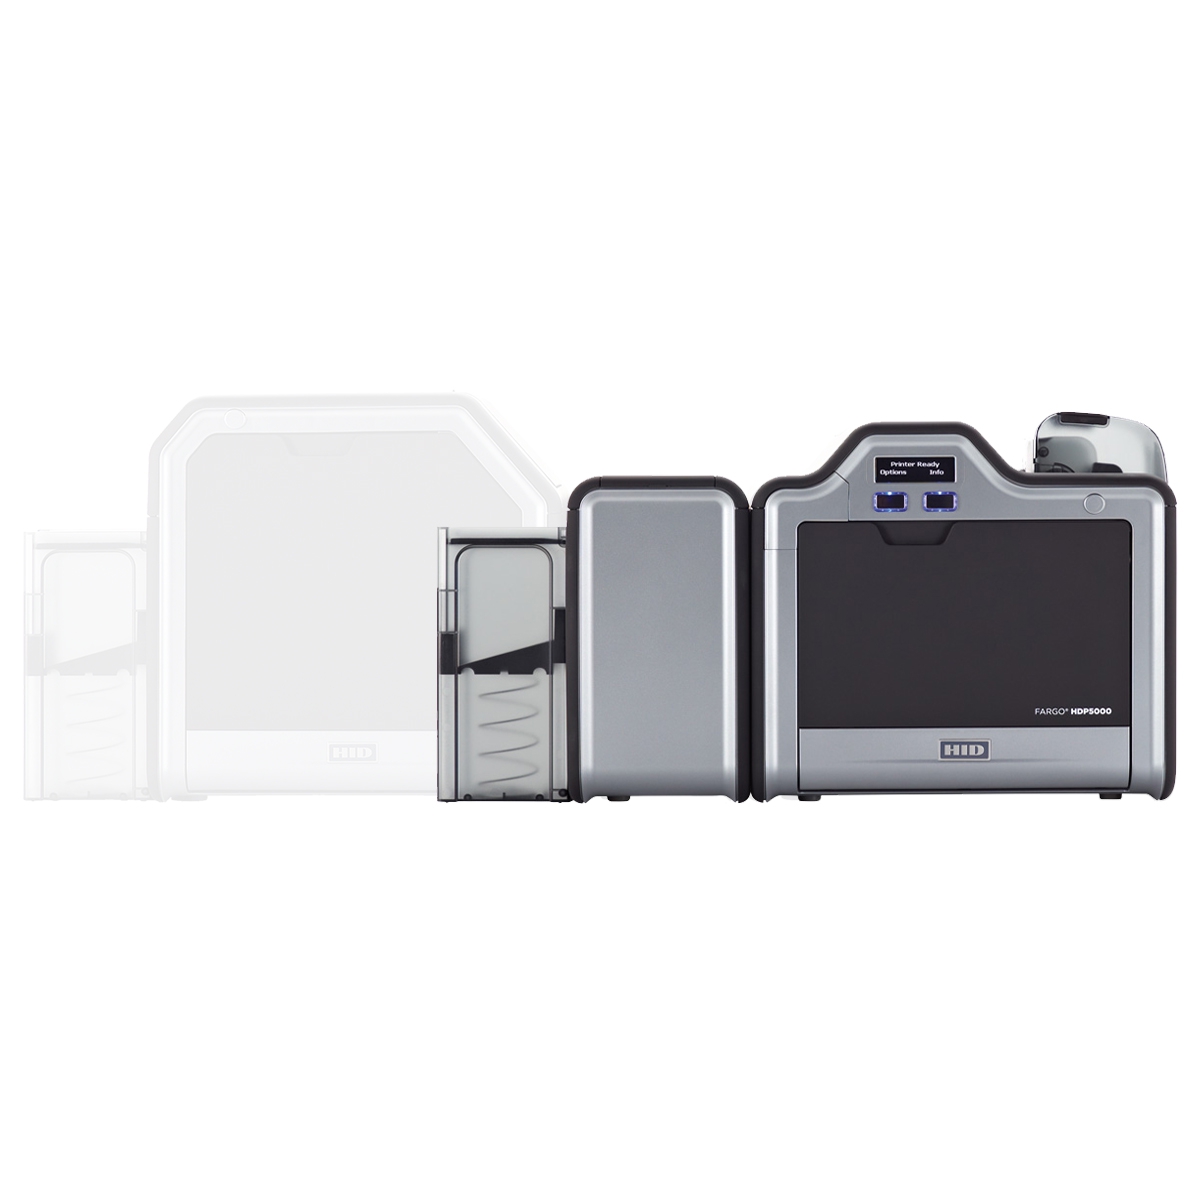 Fargo HDP5000 - Dual-Sided printer - Canada